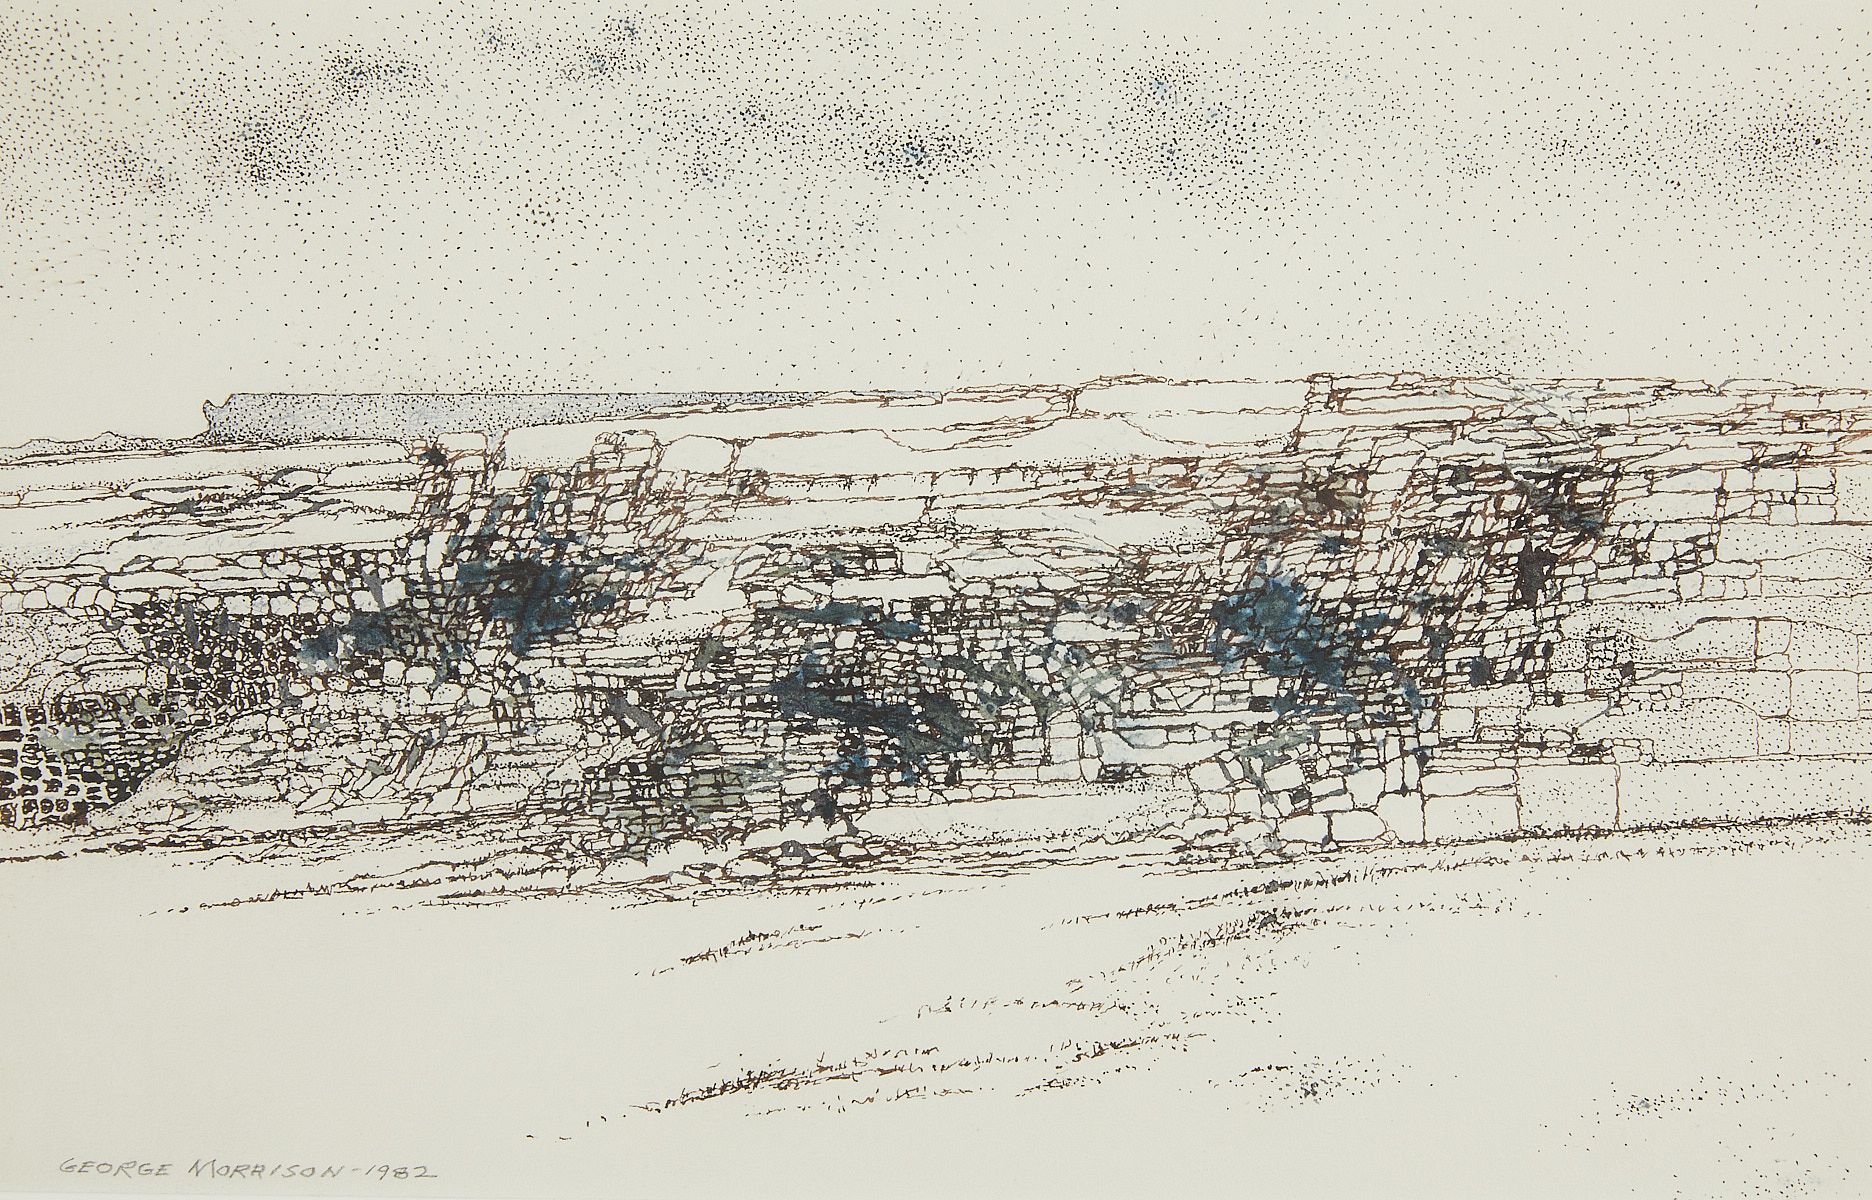 George Morrison "Mountainside" Landscape Drawing